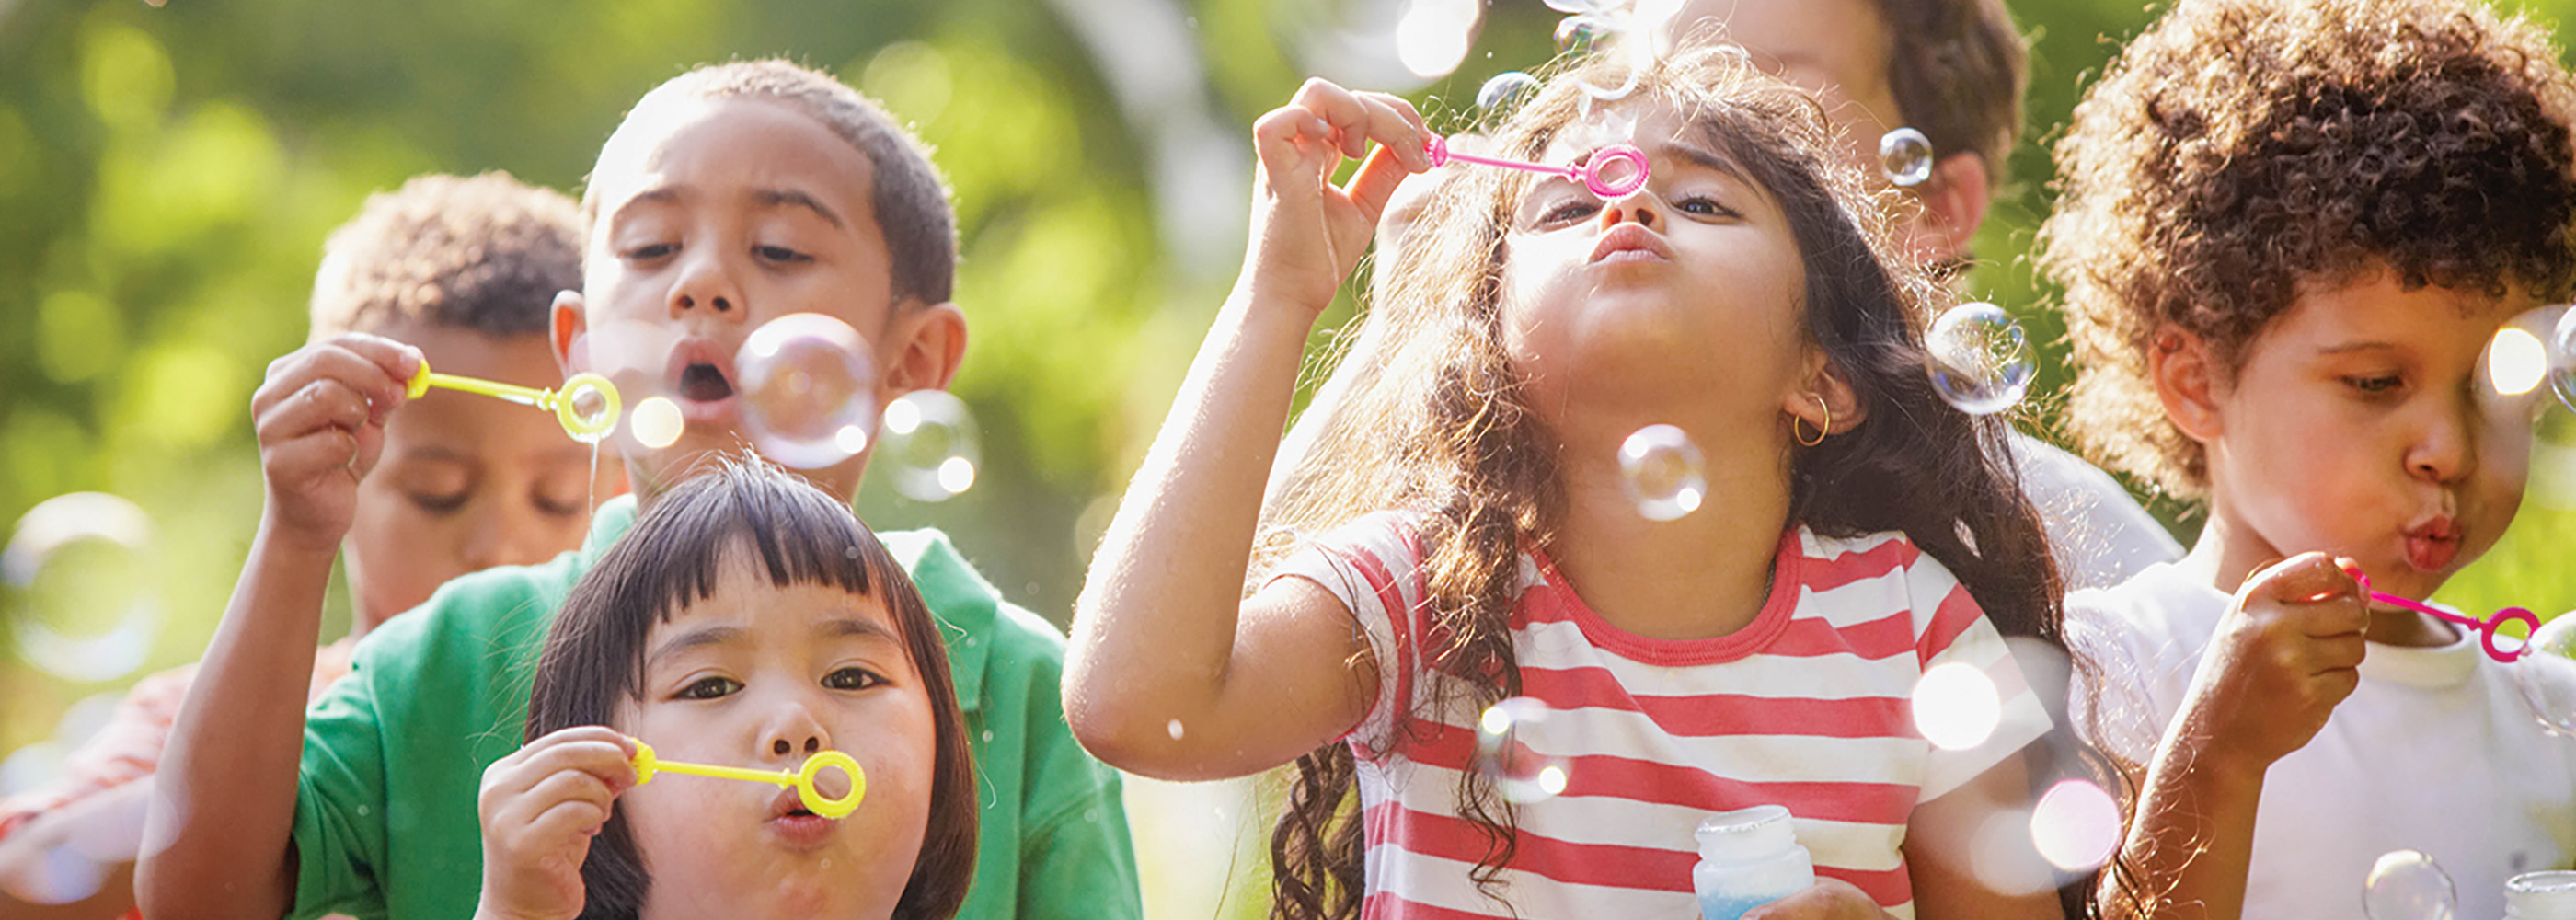 Multi-racial kids outside blowing bubbles